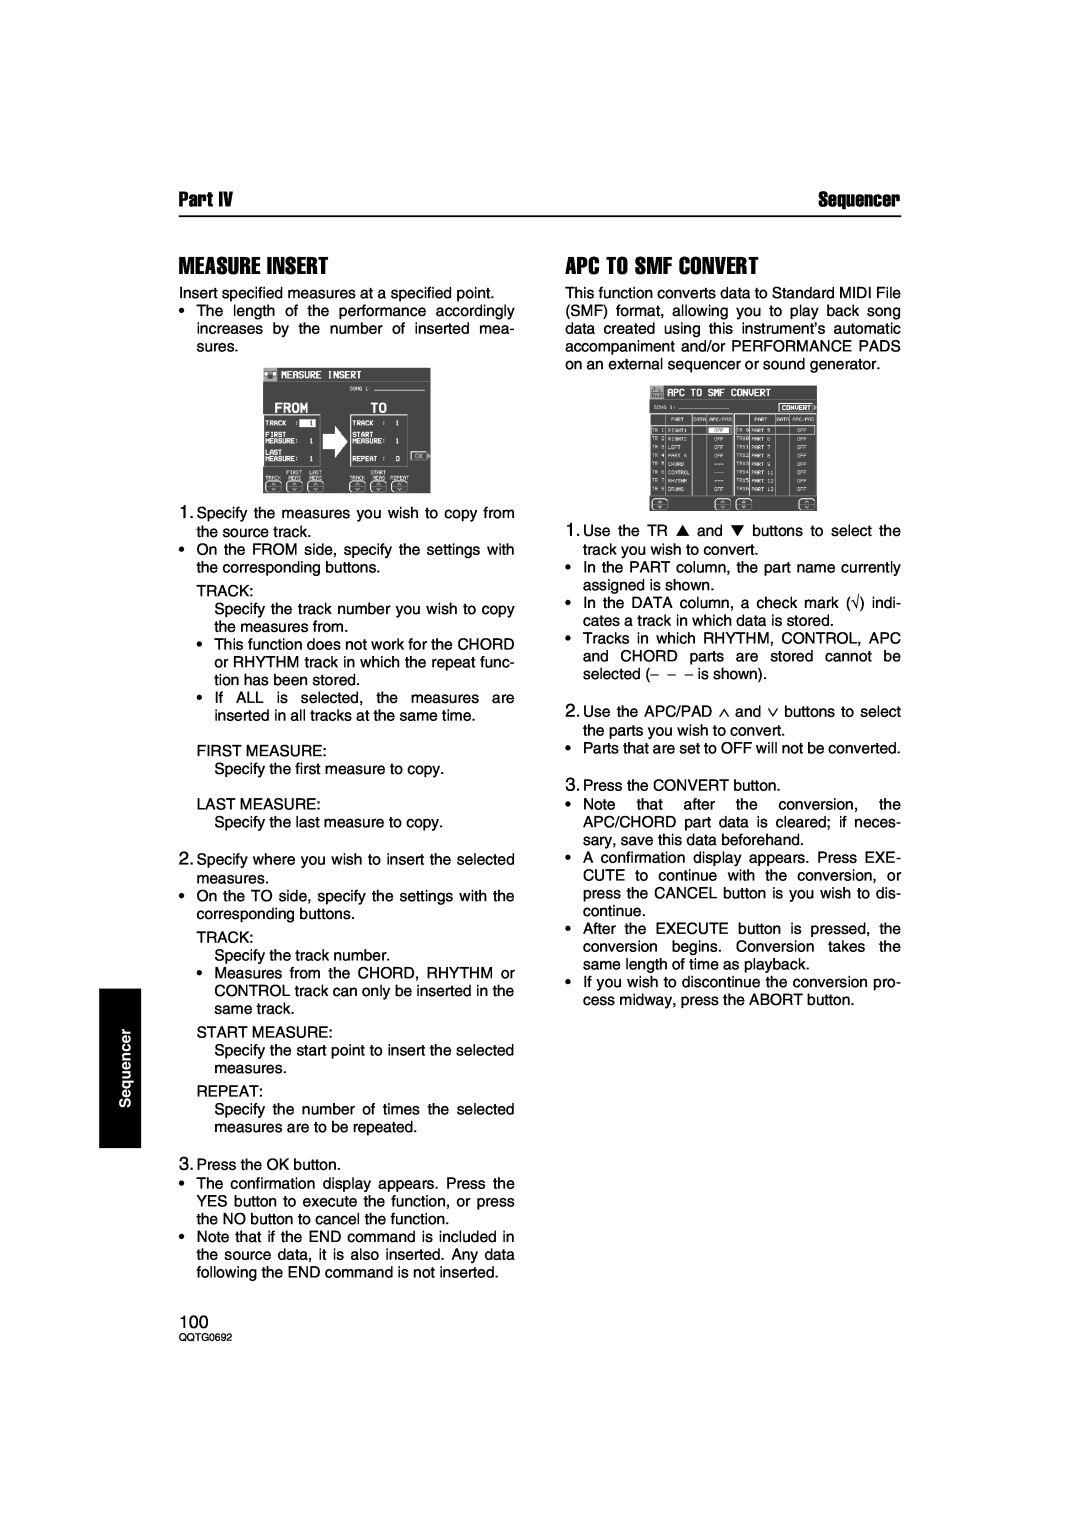 Panasonic SX-KN2600, SX-KN2400 manual Measure Insert, Apc To Smf Convert, Part, Sequencer 